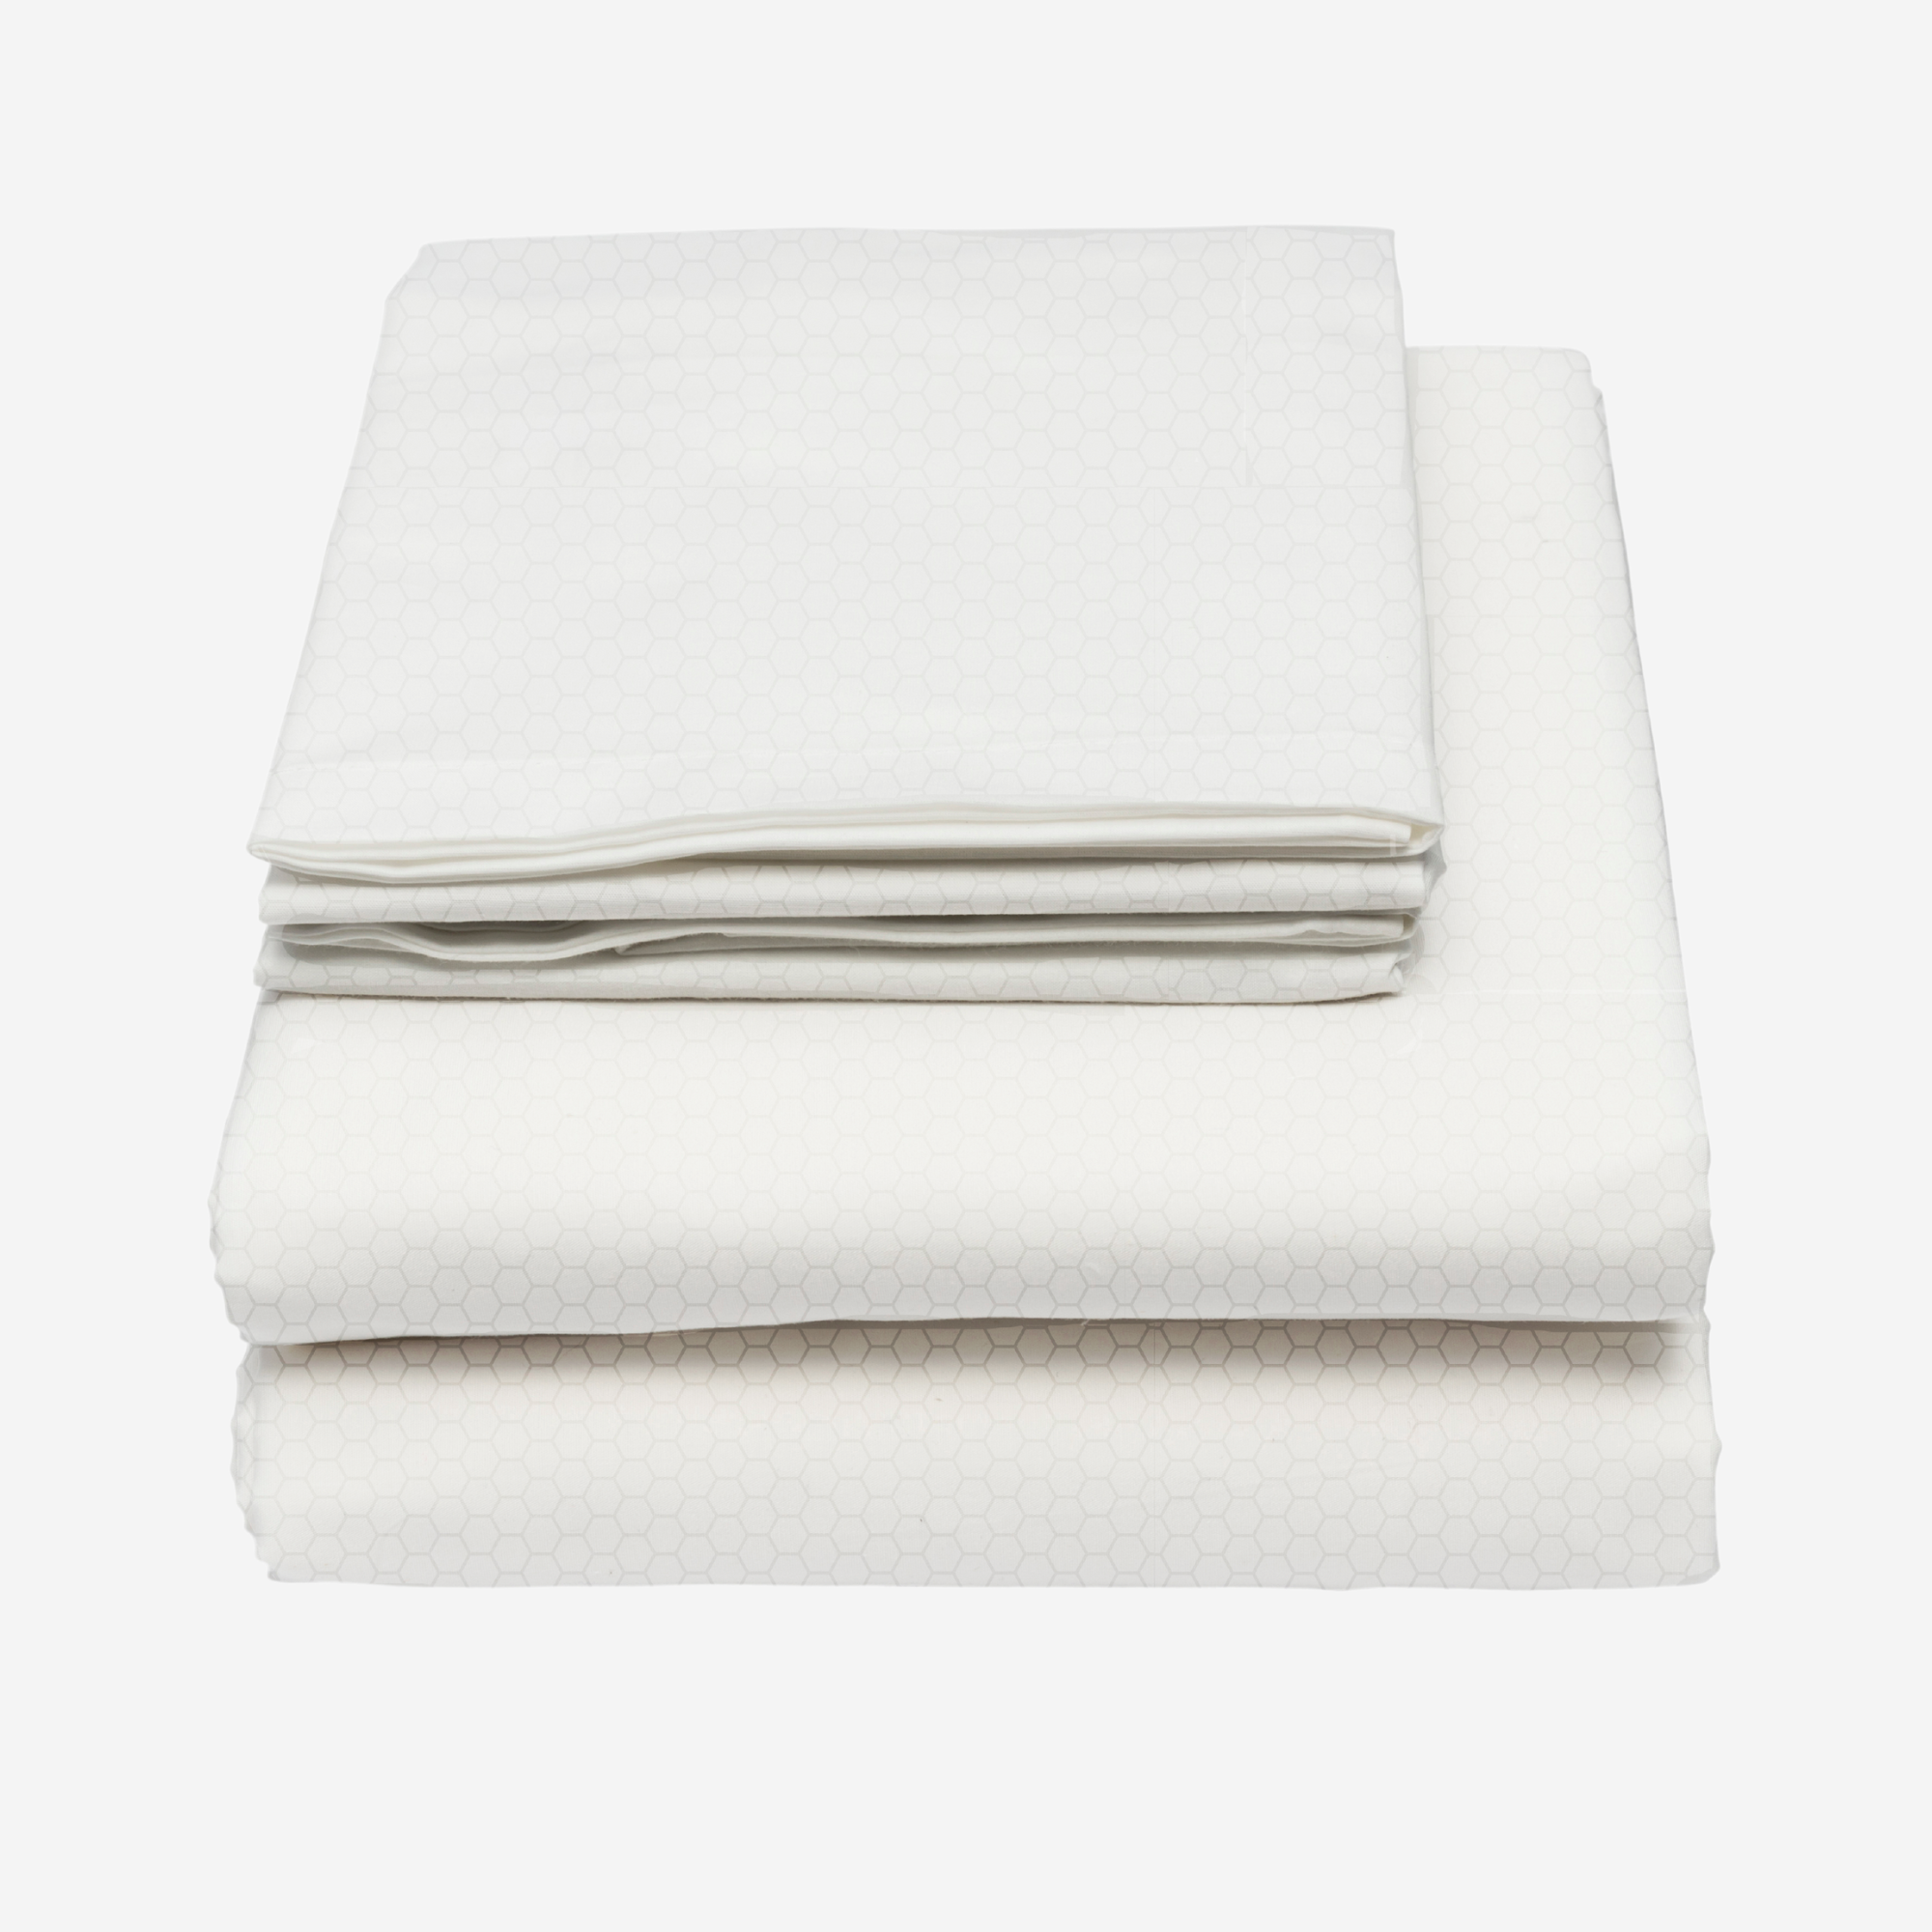 SOMÉ Continuous Cooling Performance Sheets - Lusomé Sleepwear